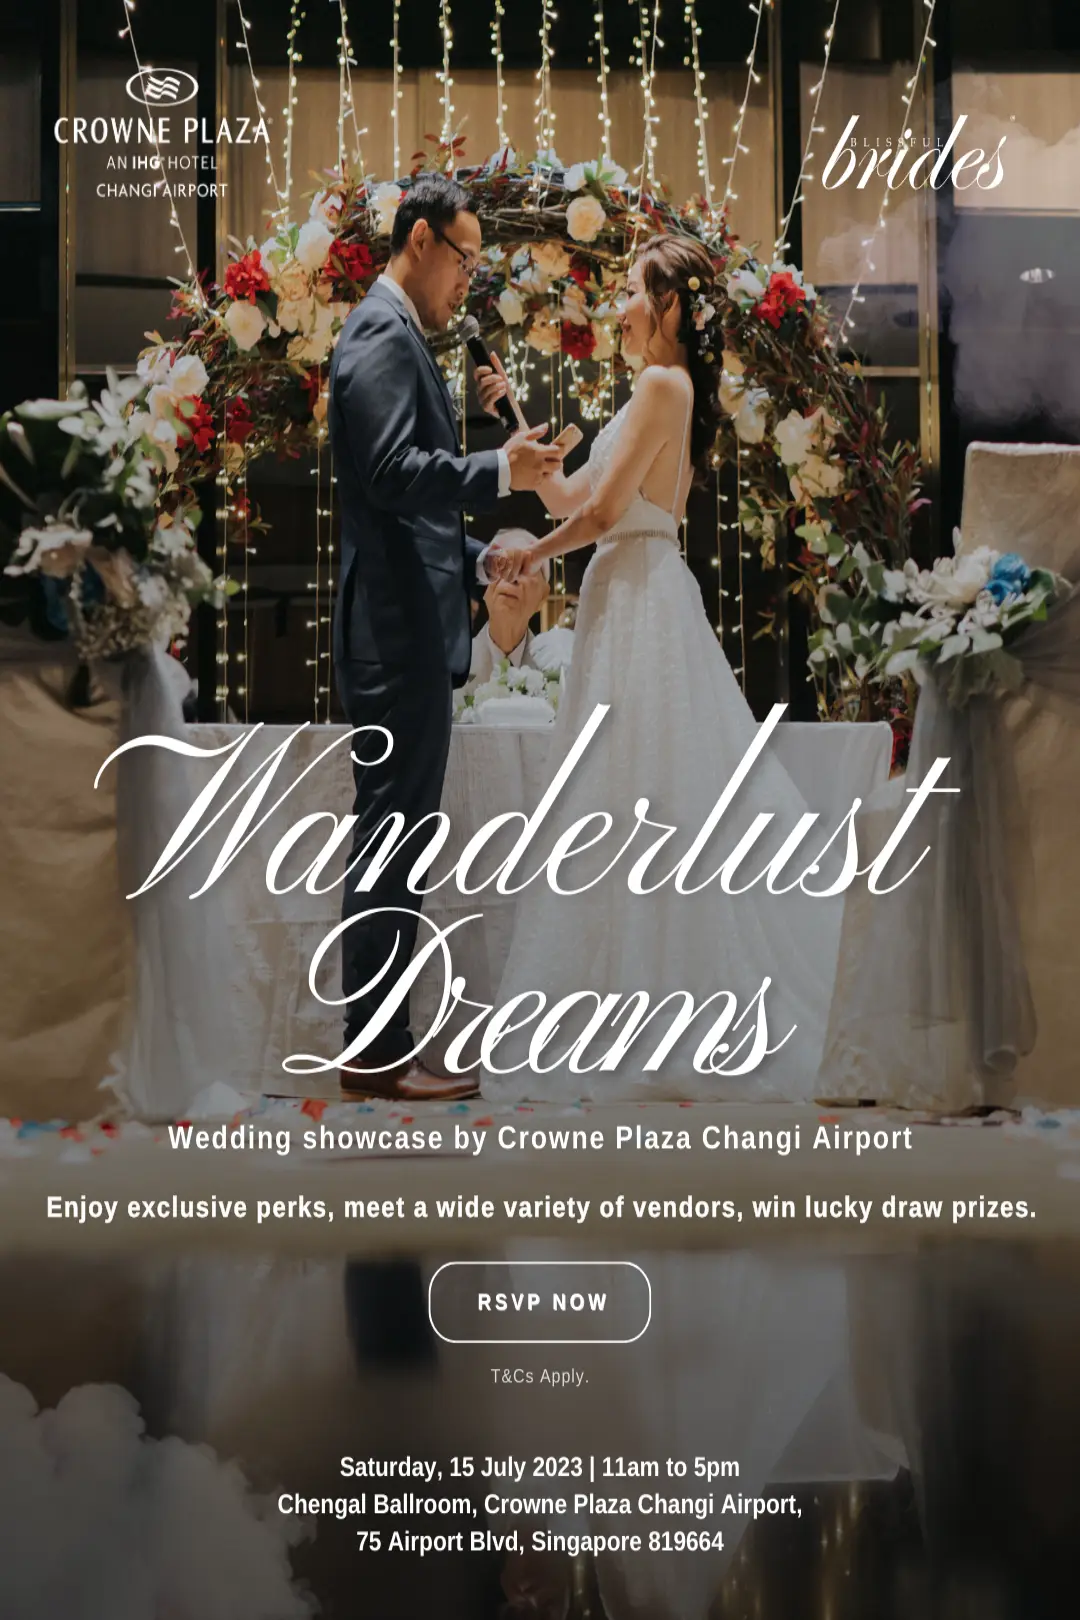 Wanderlust Dreams Wedding Showcase 2023 by Crowne Plaza Changi Airport